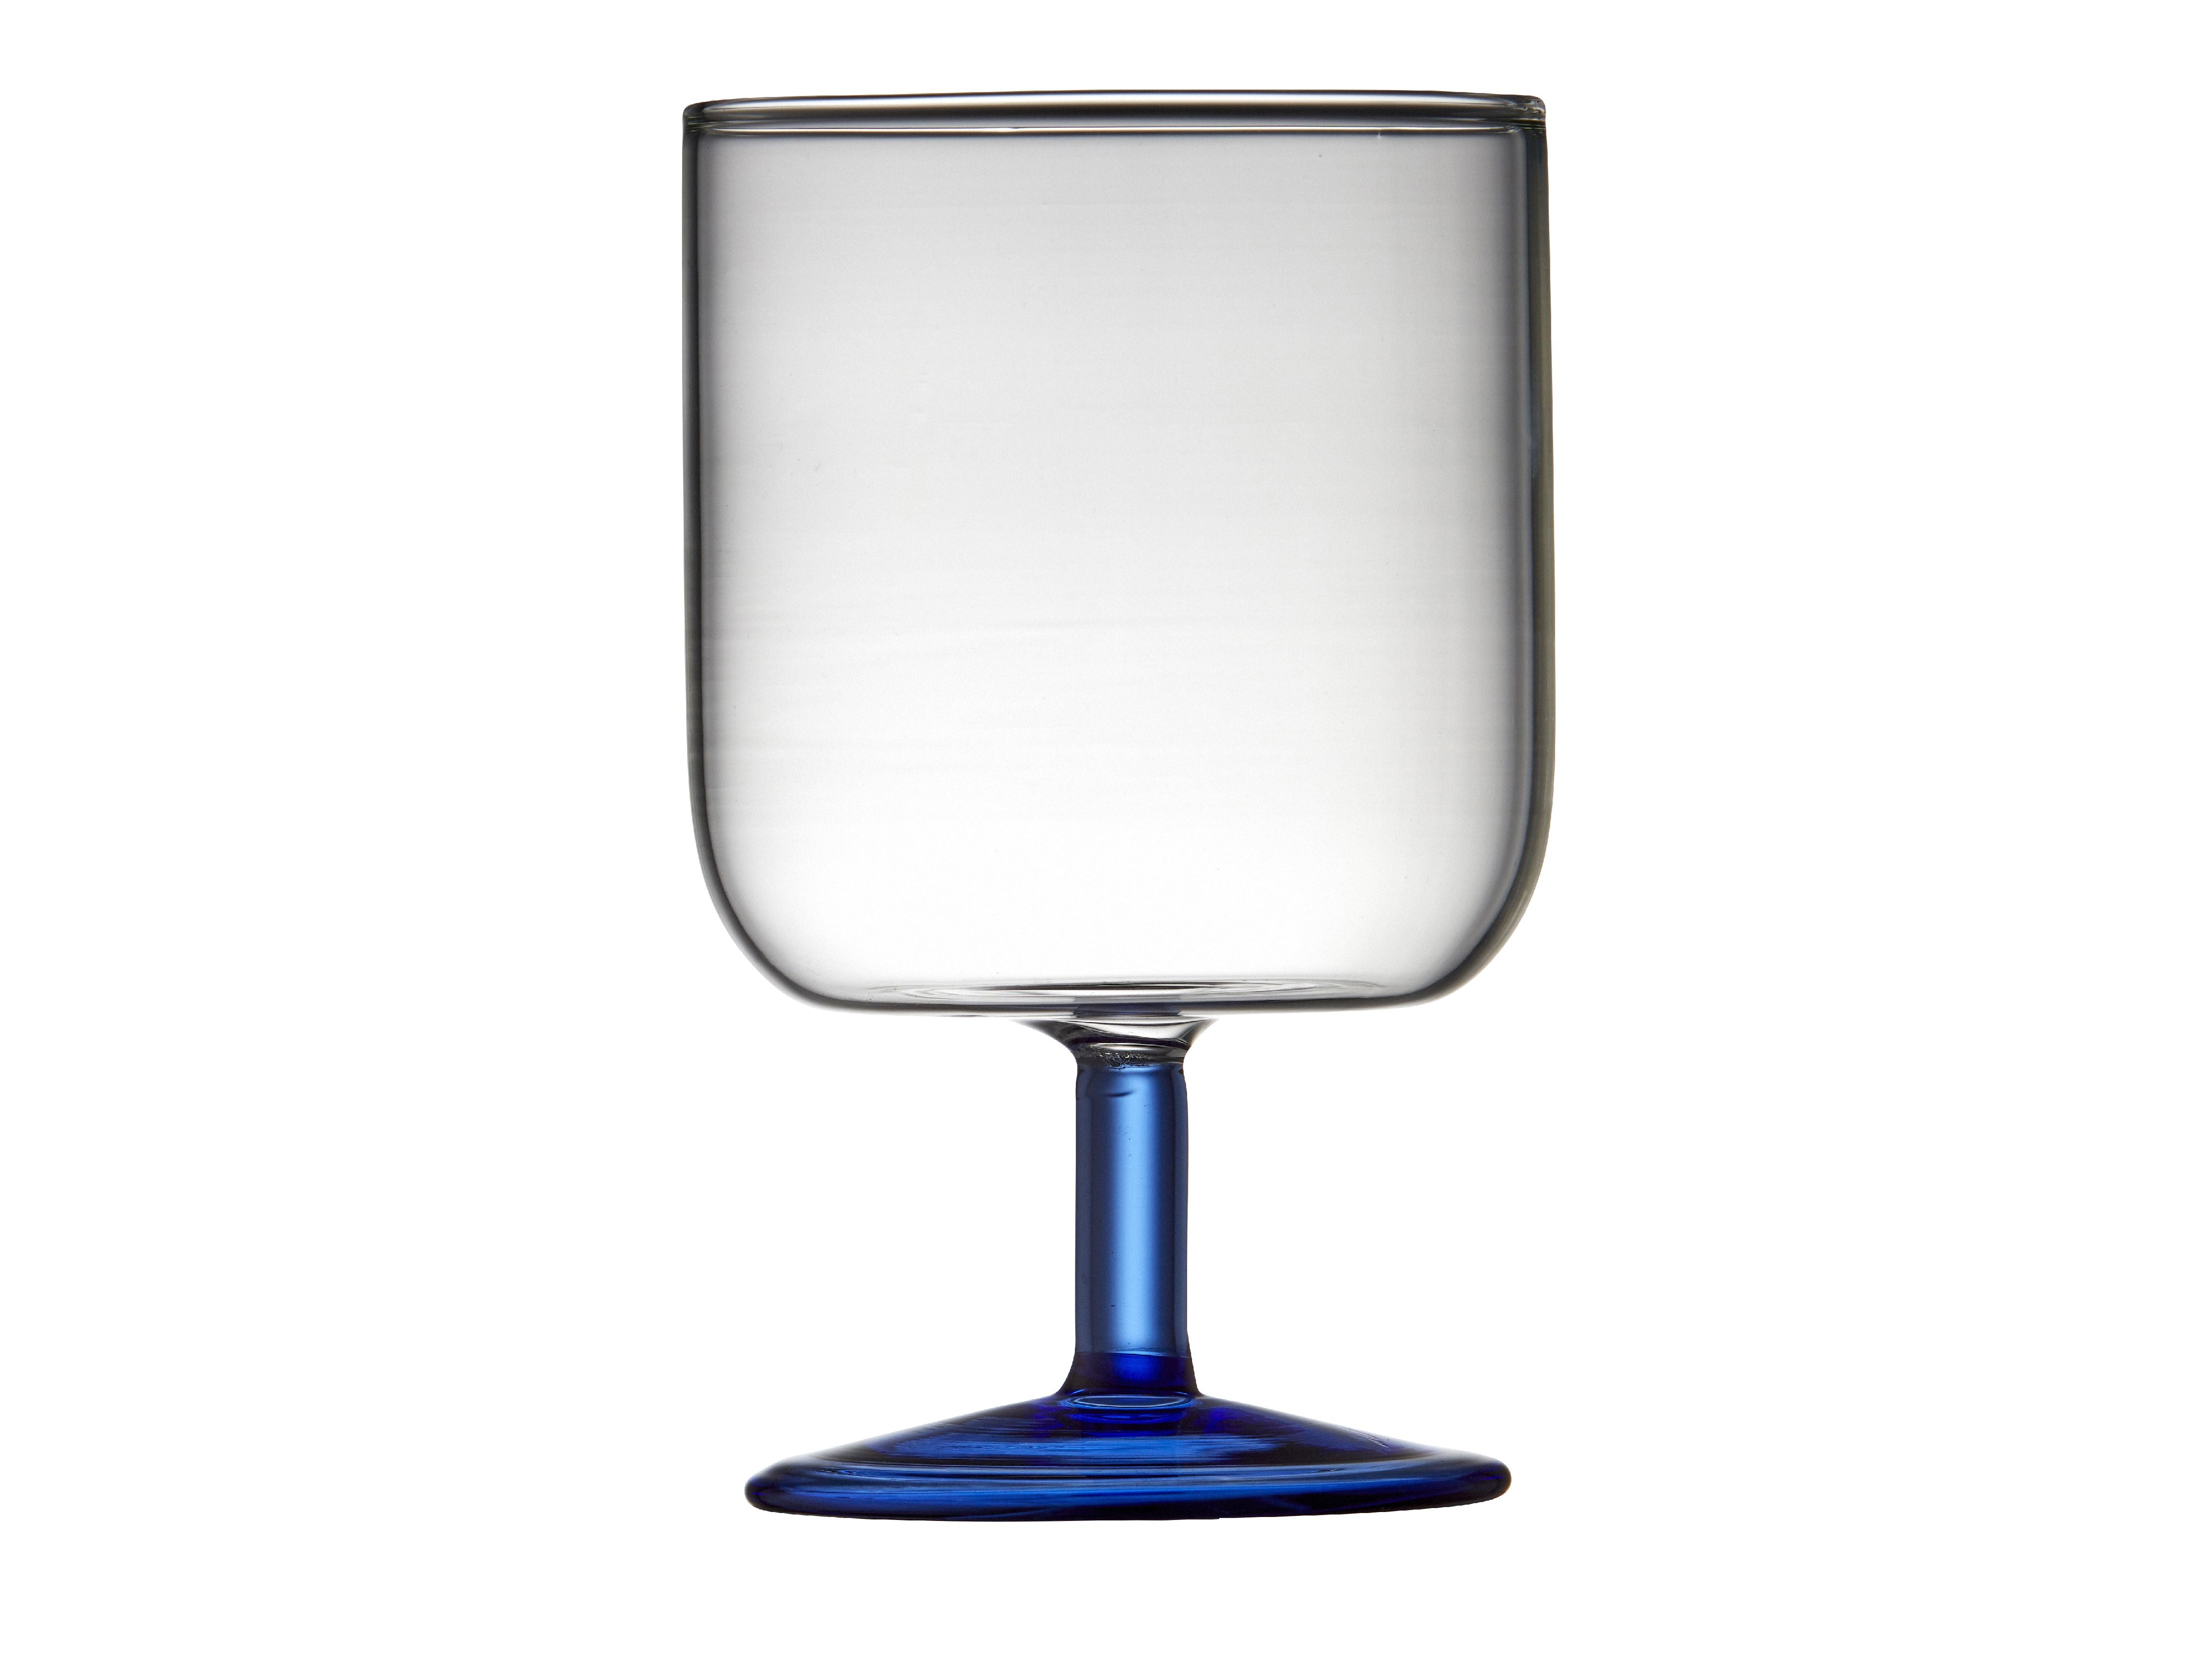 Lyngby Glas Torino Weinglas 30 Cl 2 PCs, klar/blau